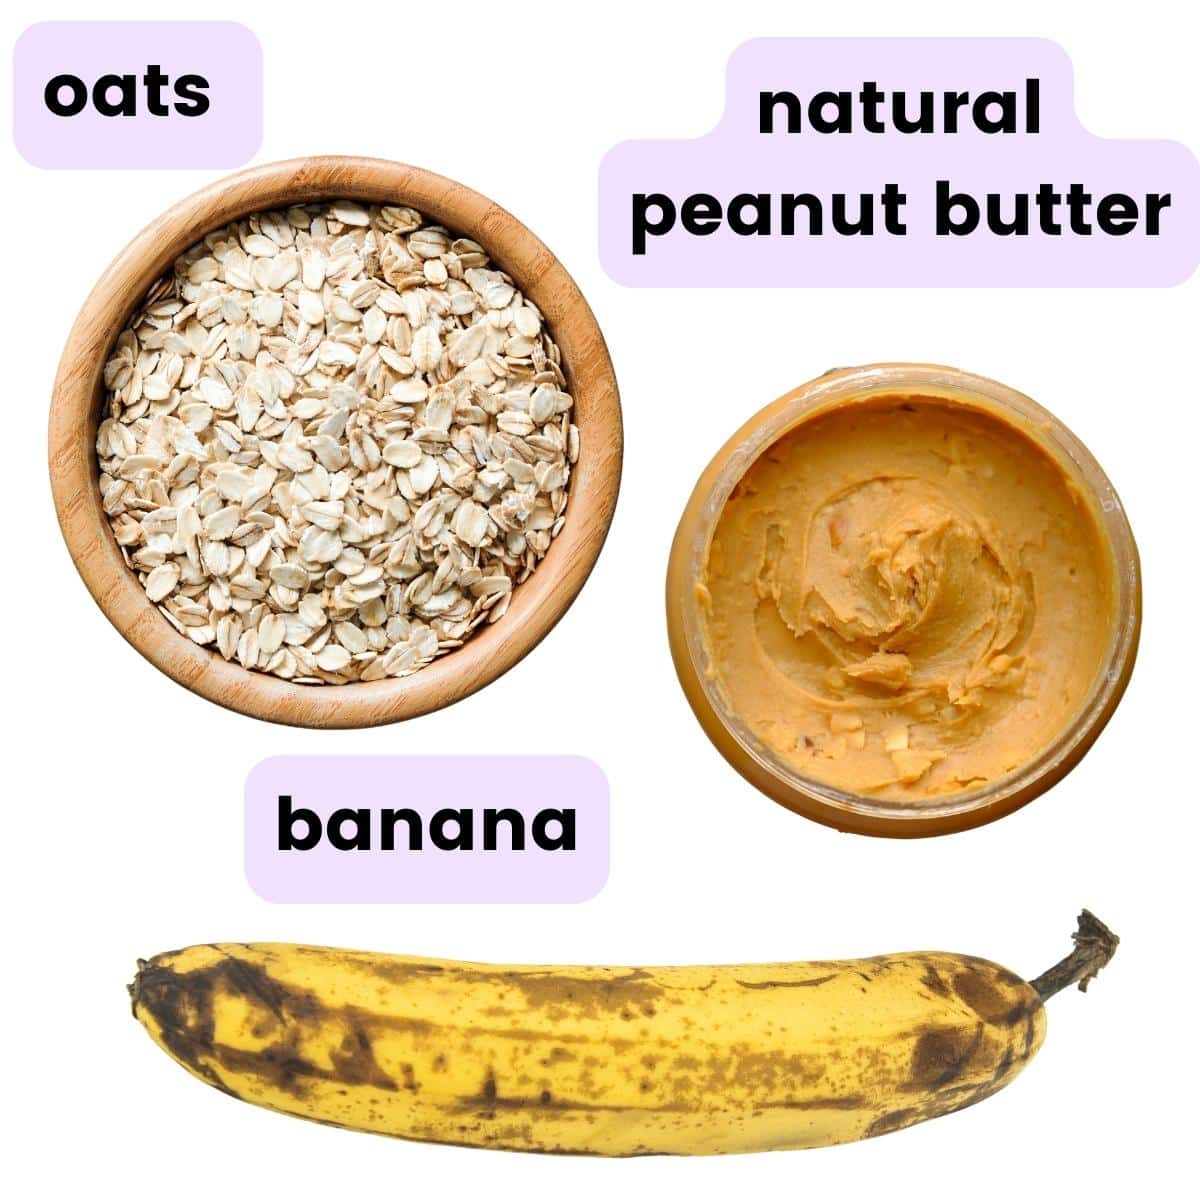 oats, peanut butter and a banana